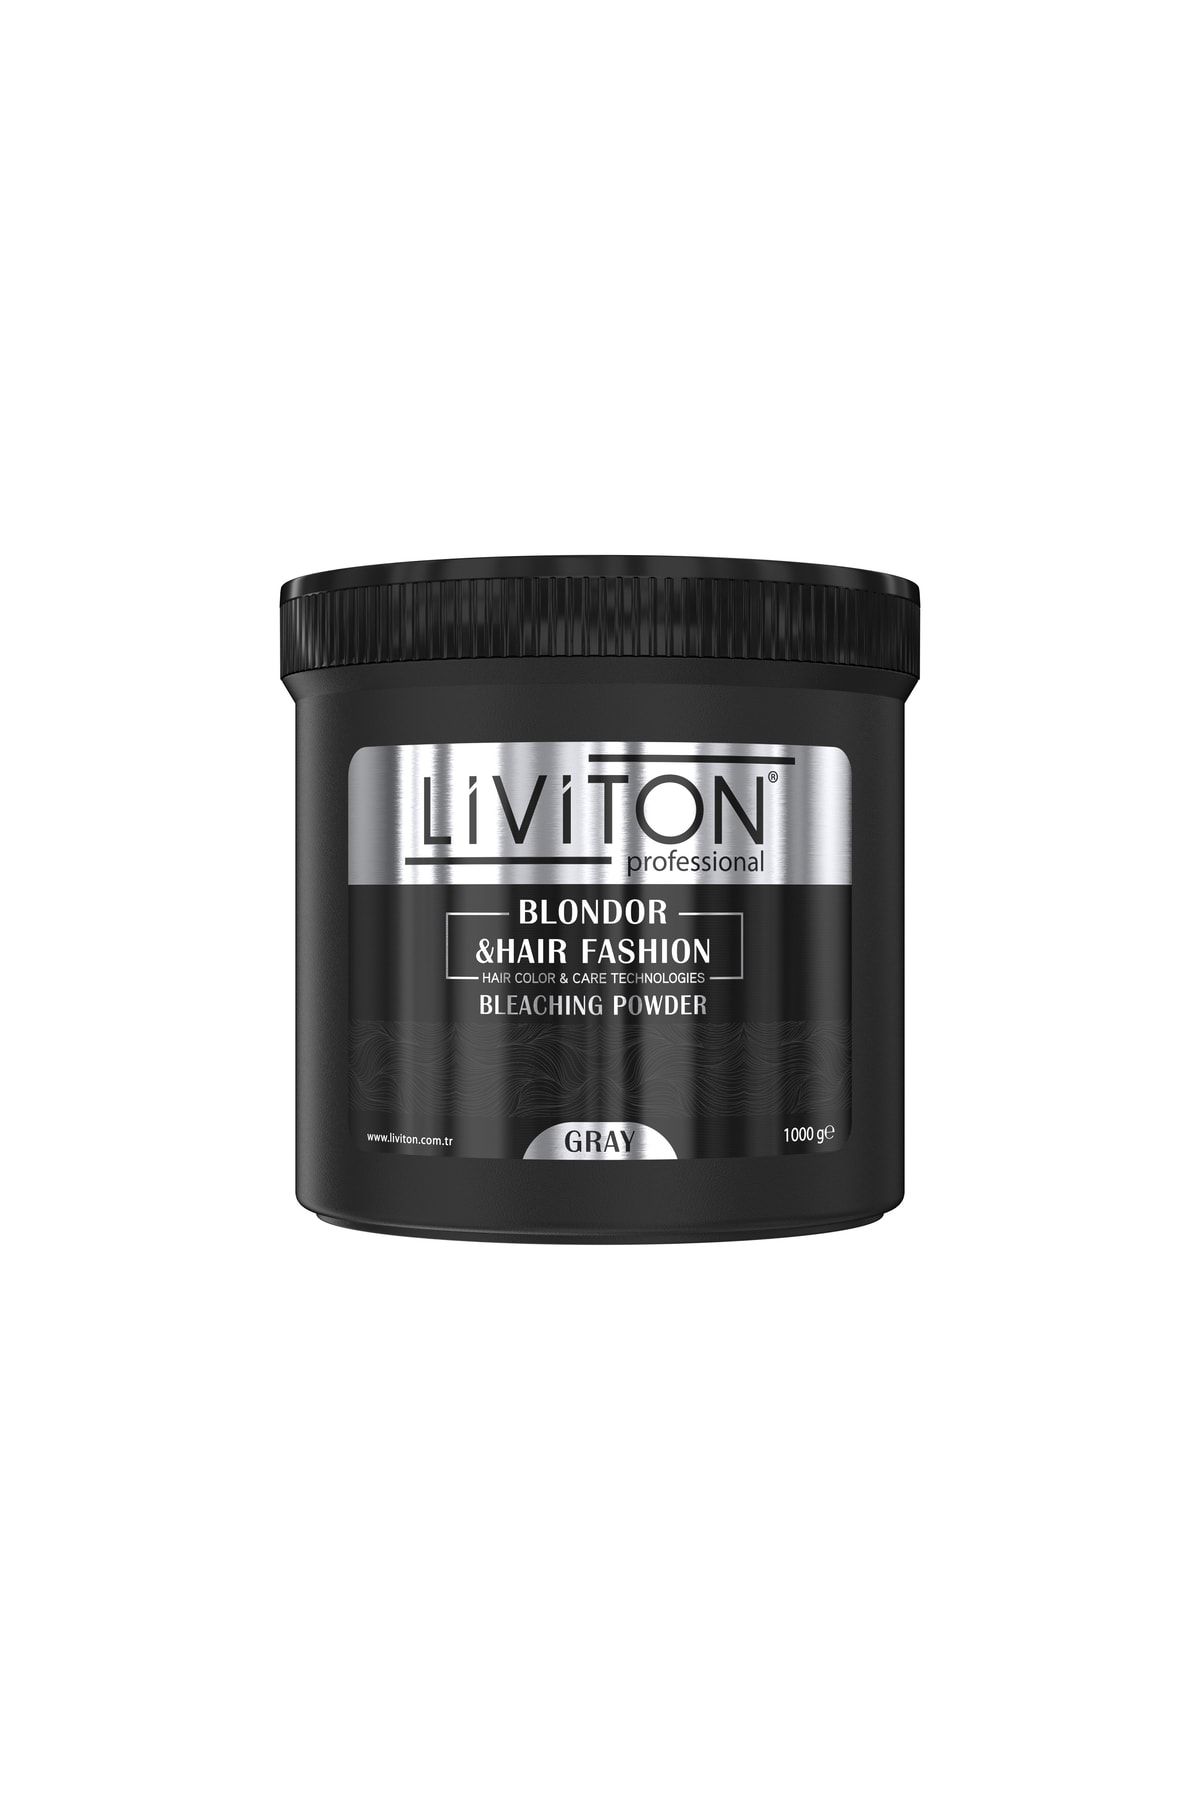 Liviton Professional Gray Toz Açıcı 1000gr (blonder Bleanching Powder)